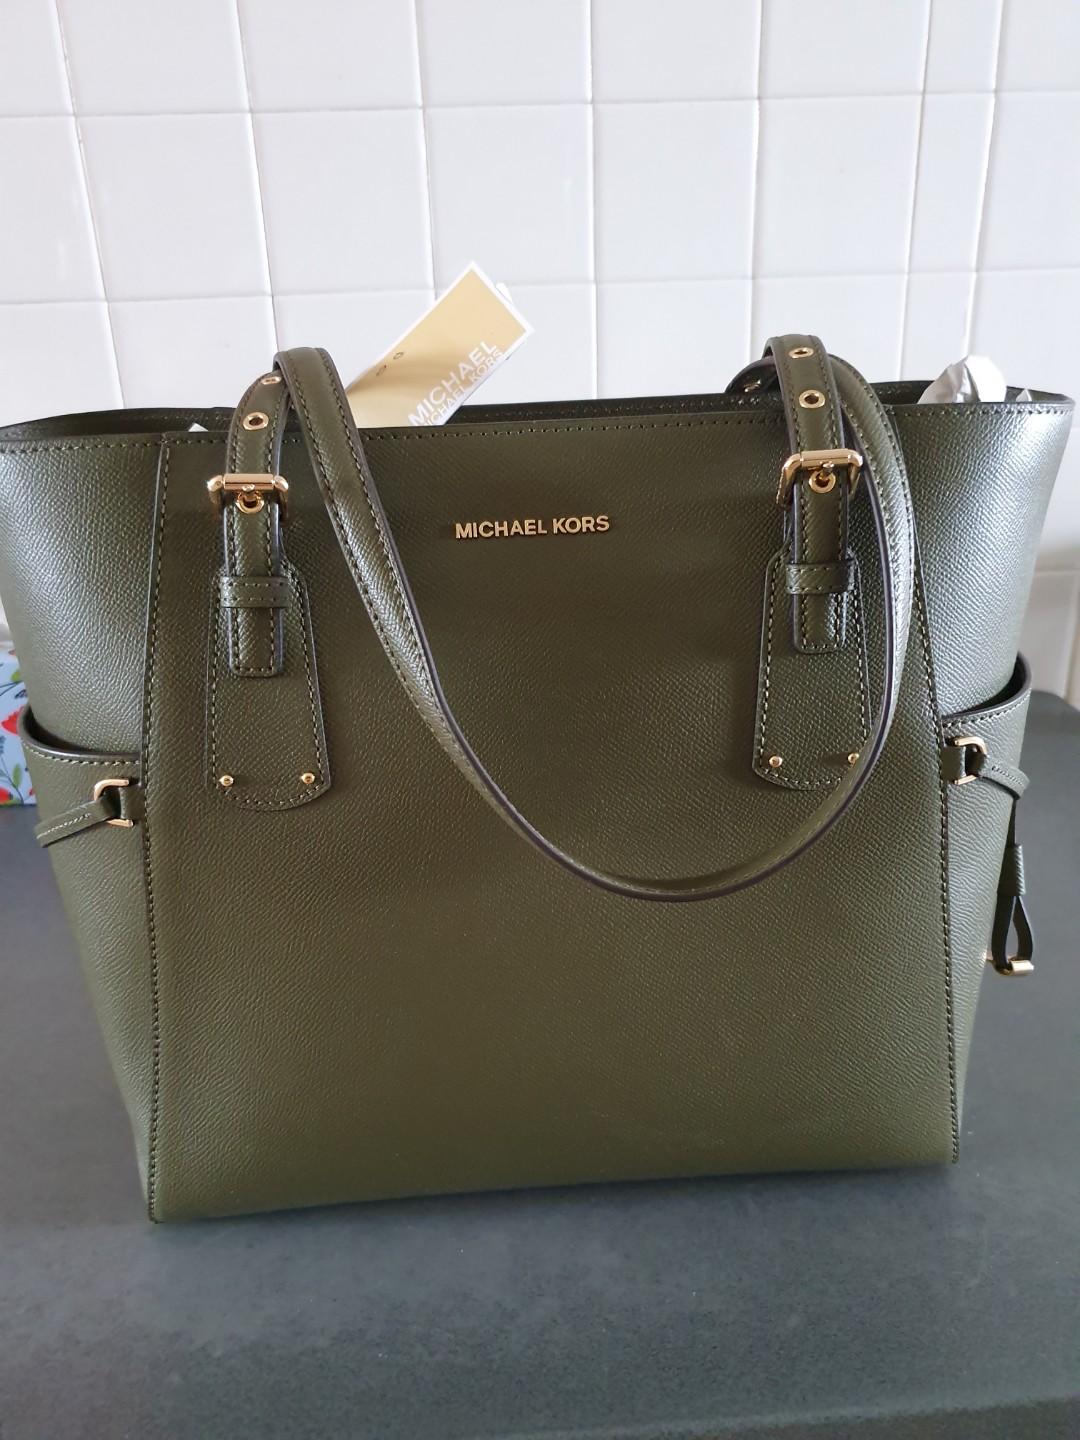 michael kors olive green handbag